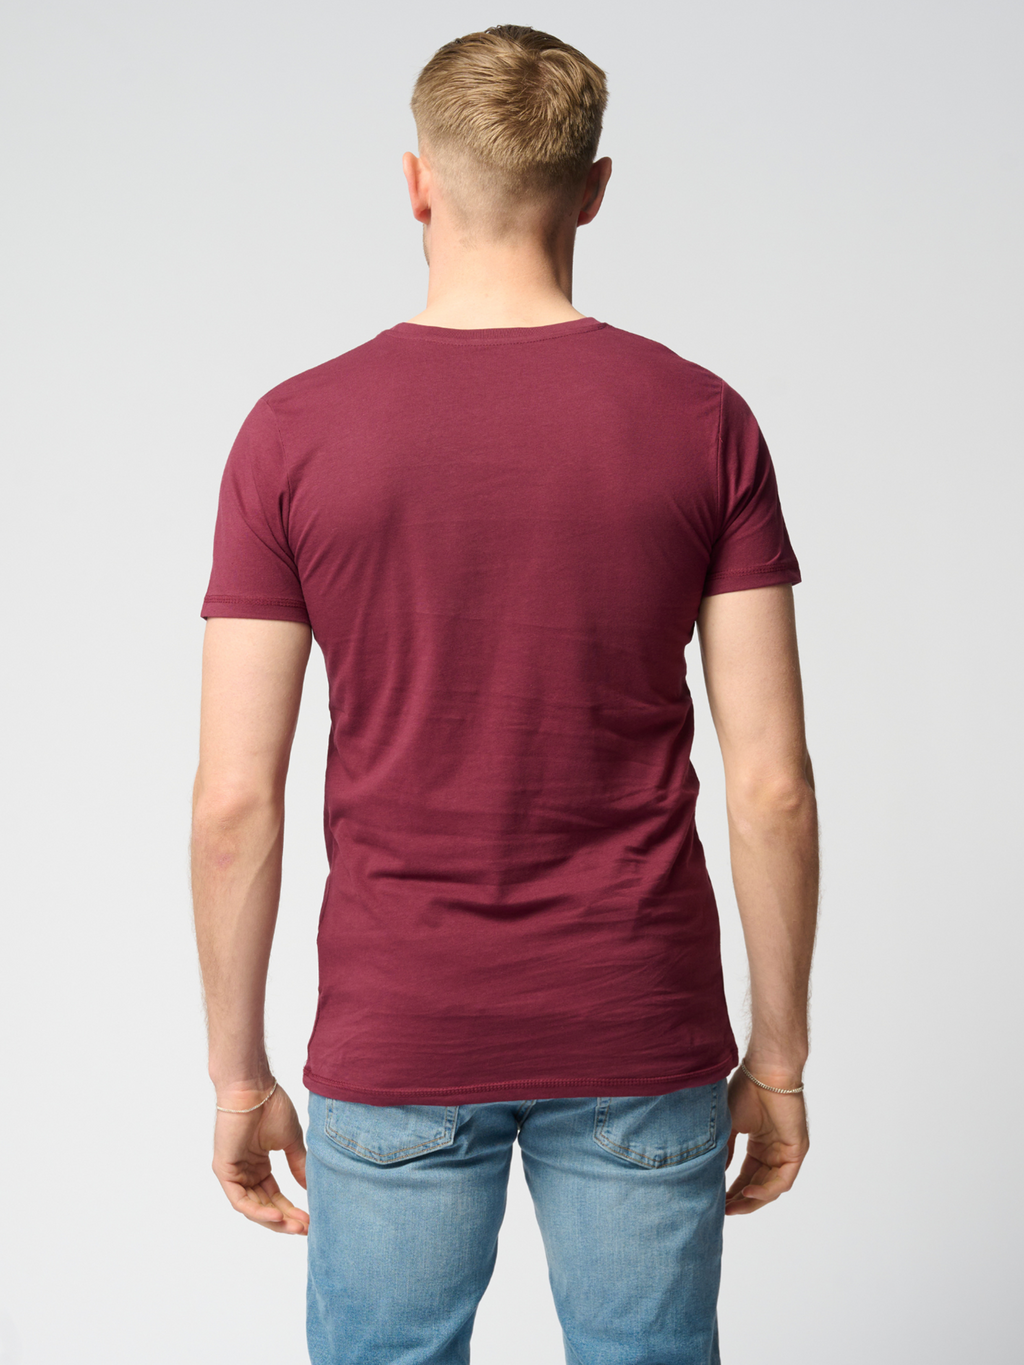 Muscle T-shirt - Burgundy